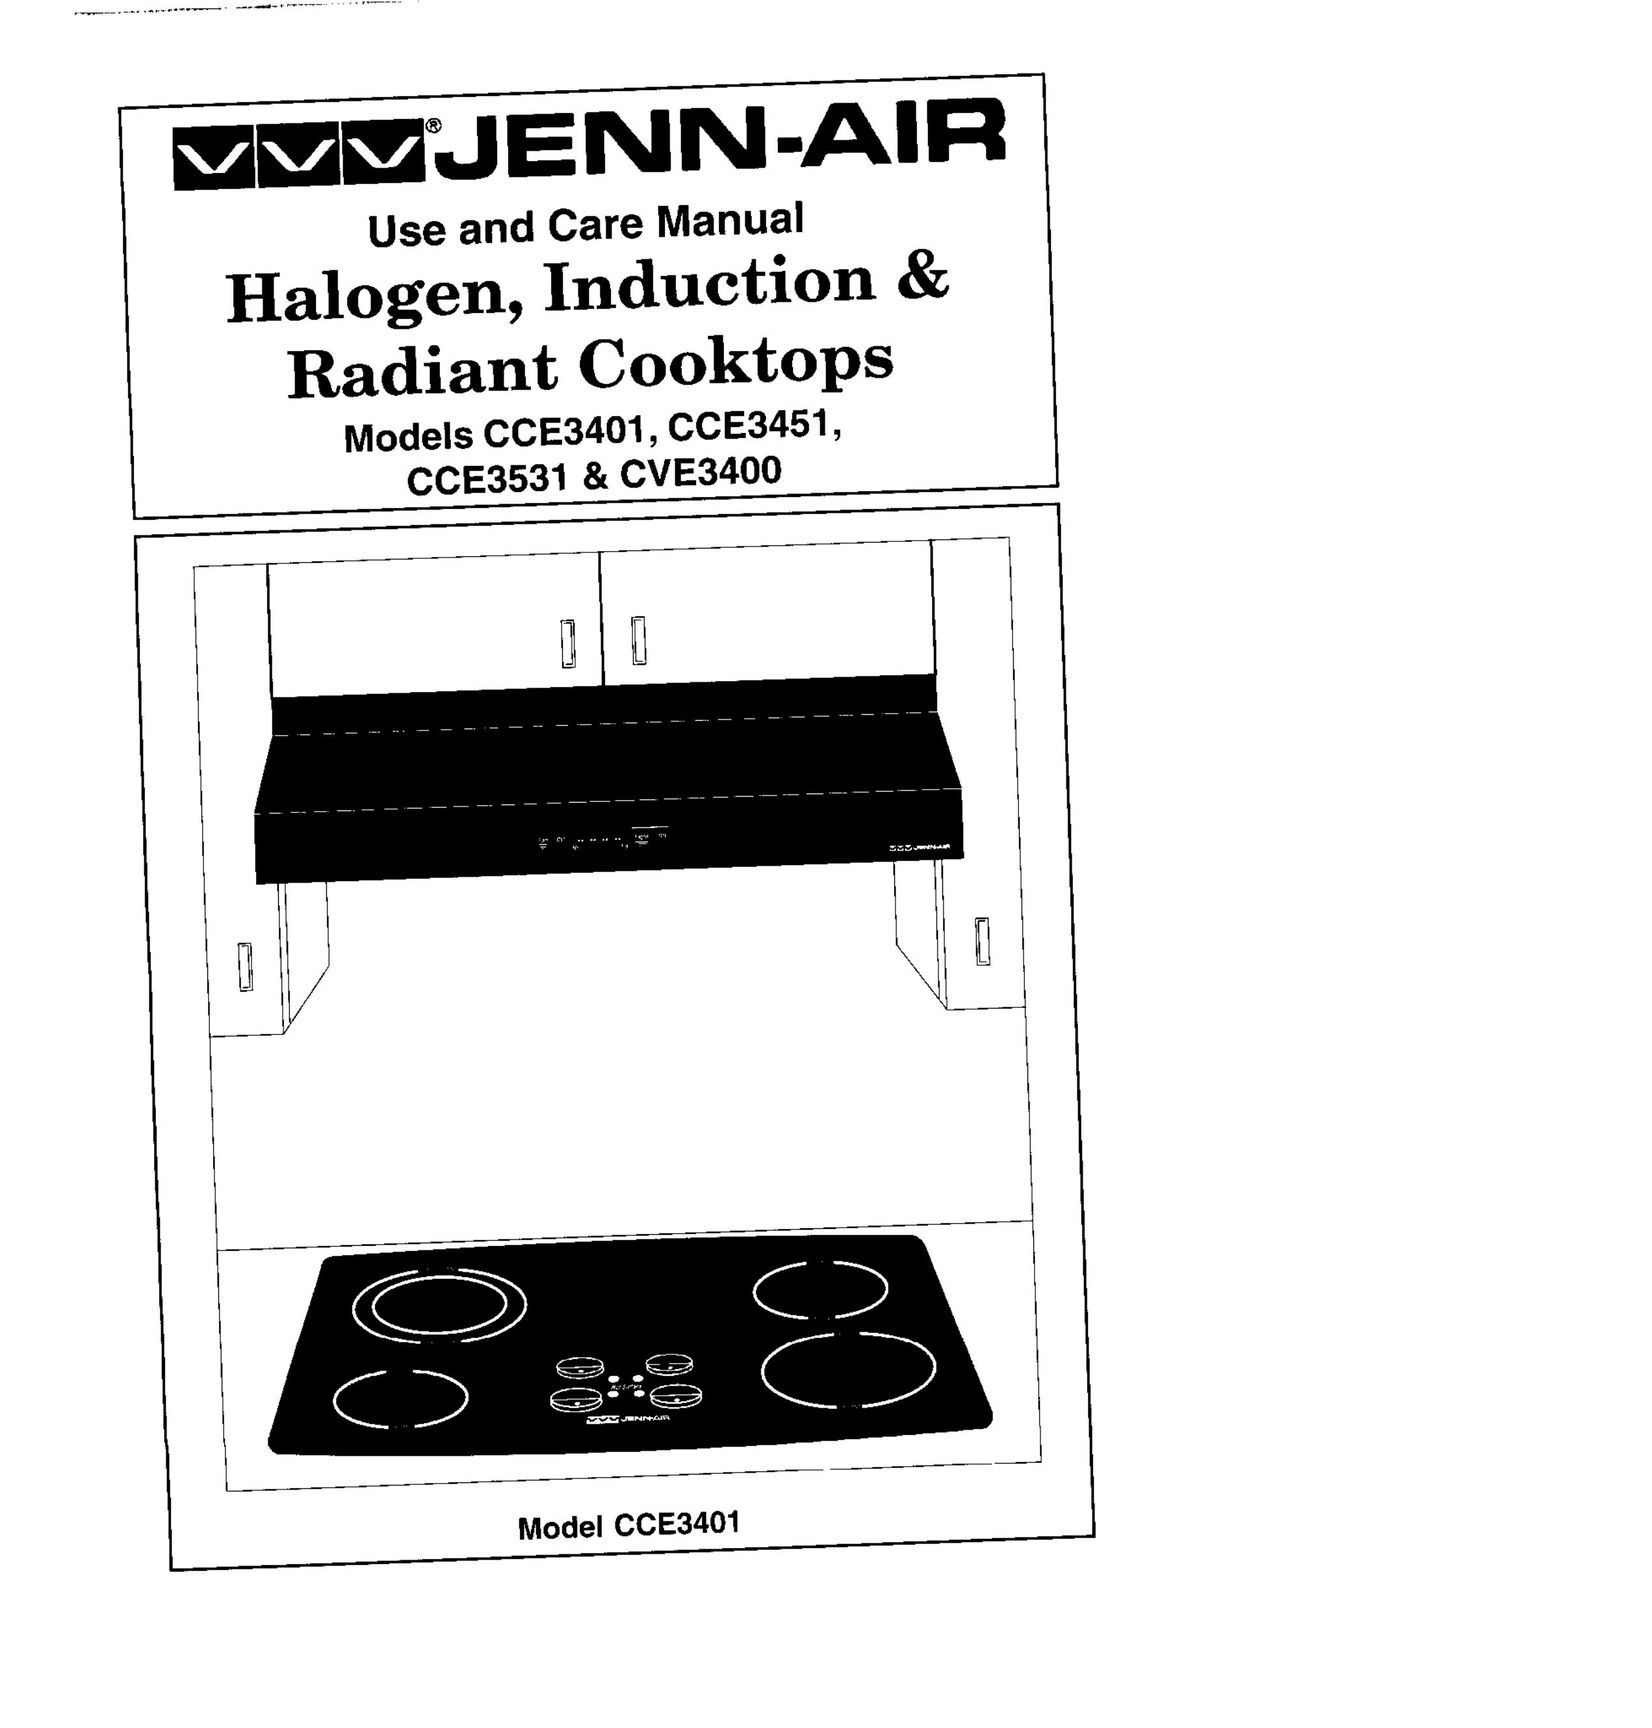 Jenn-Air CVE3400 Cooktop User Manual